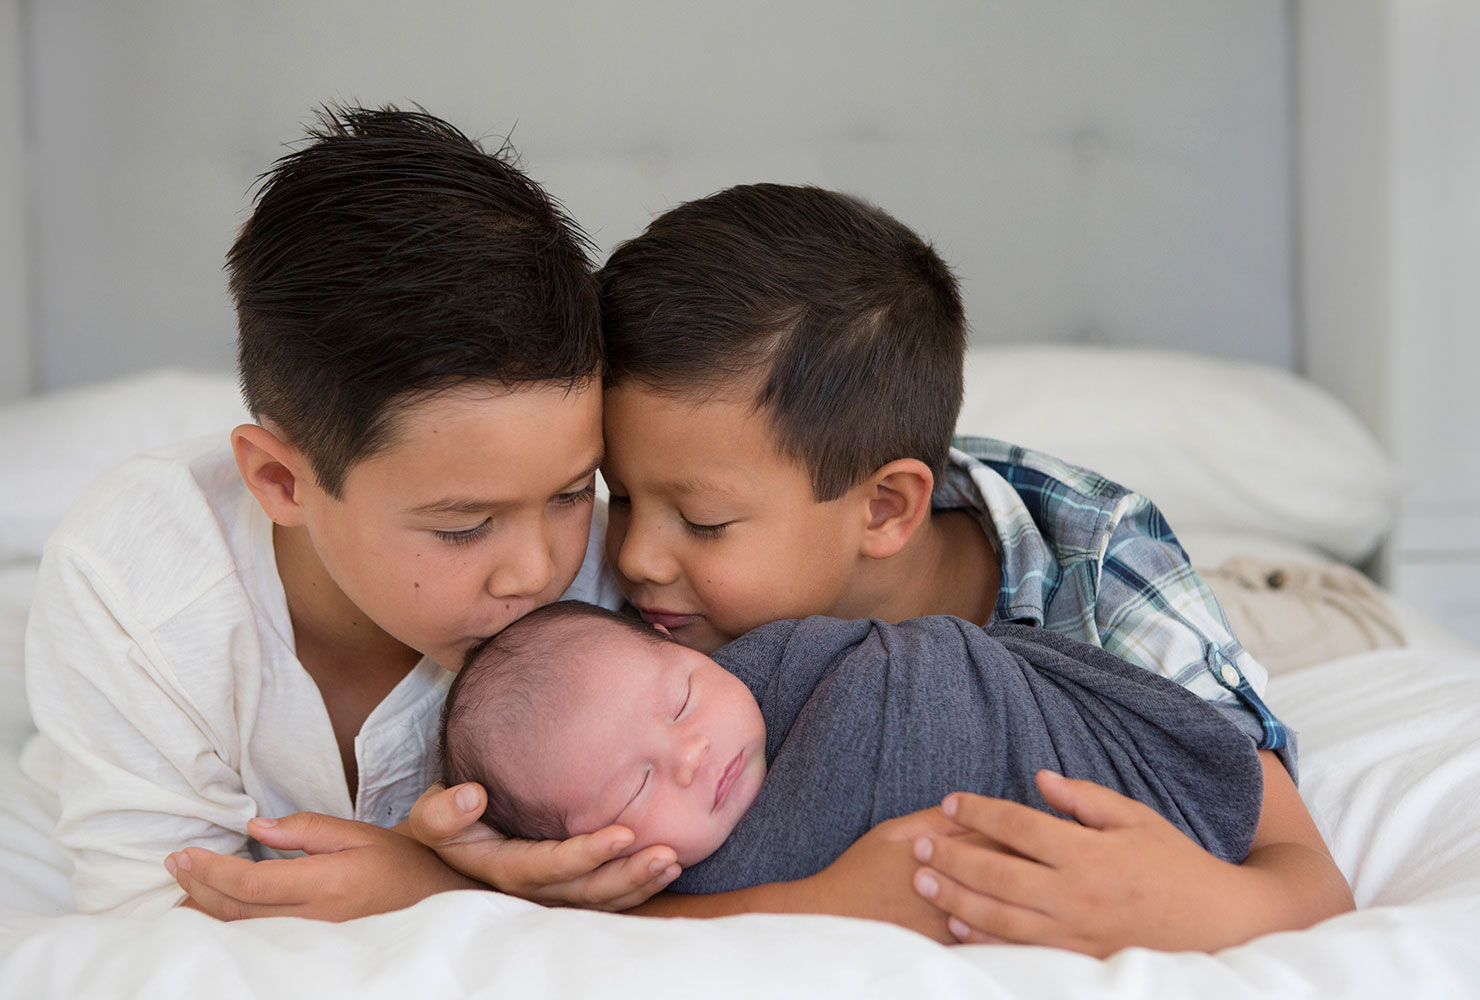 sibling photo ideas boys kissing baby